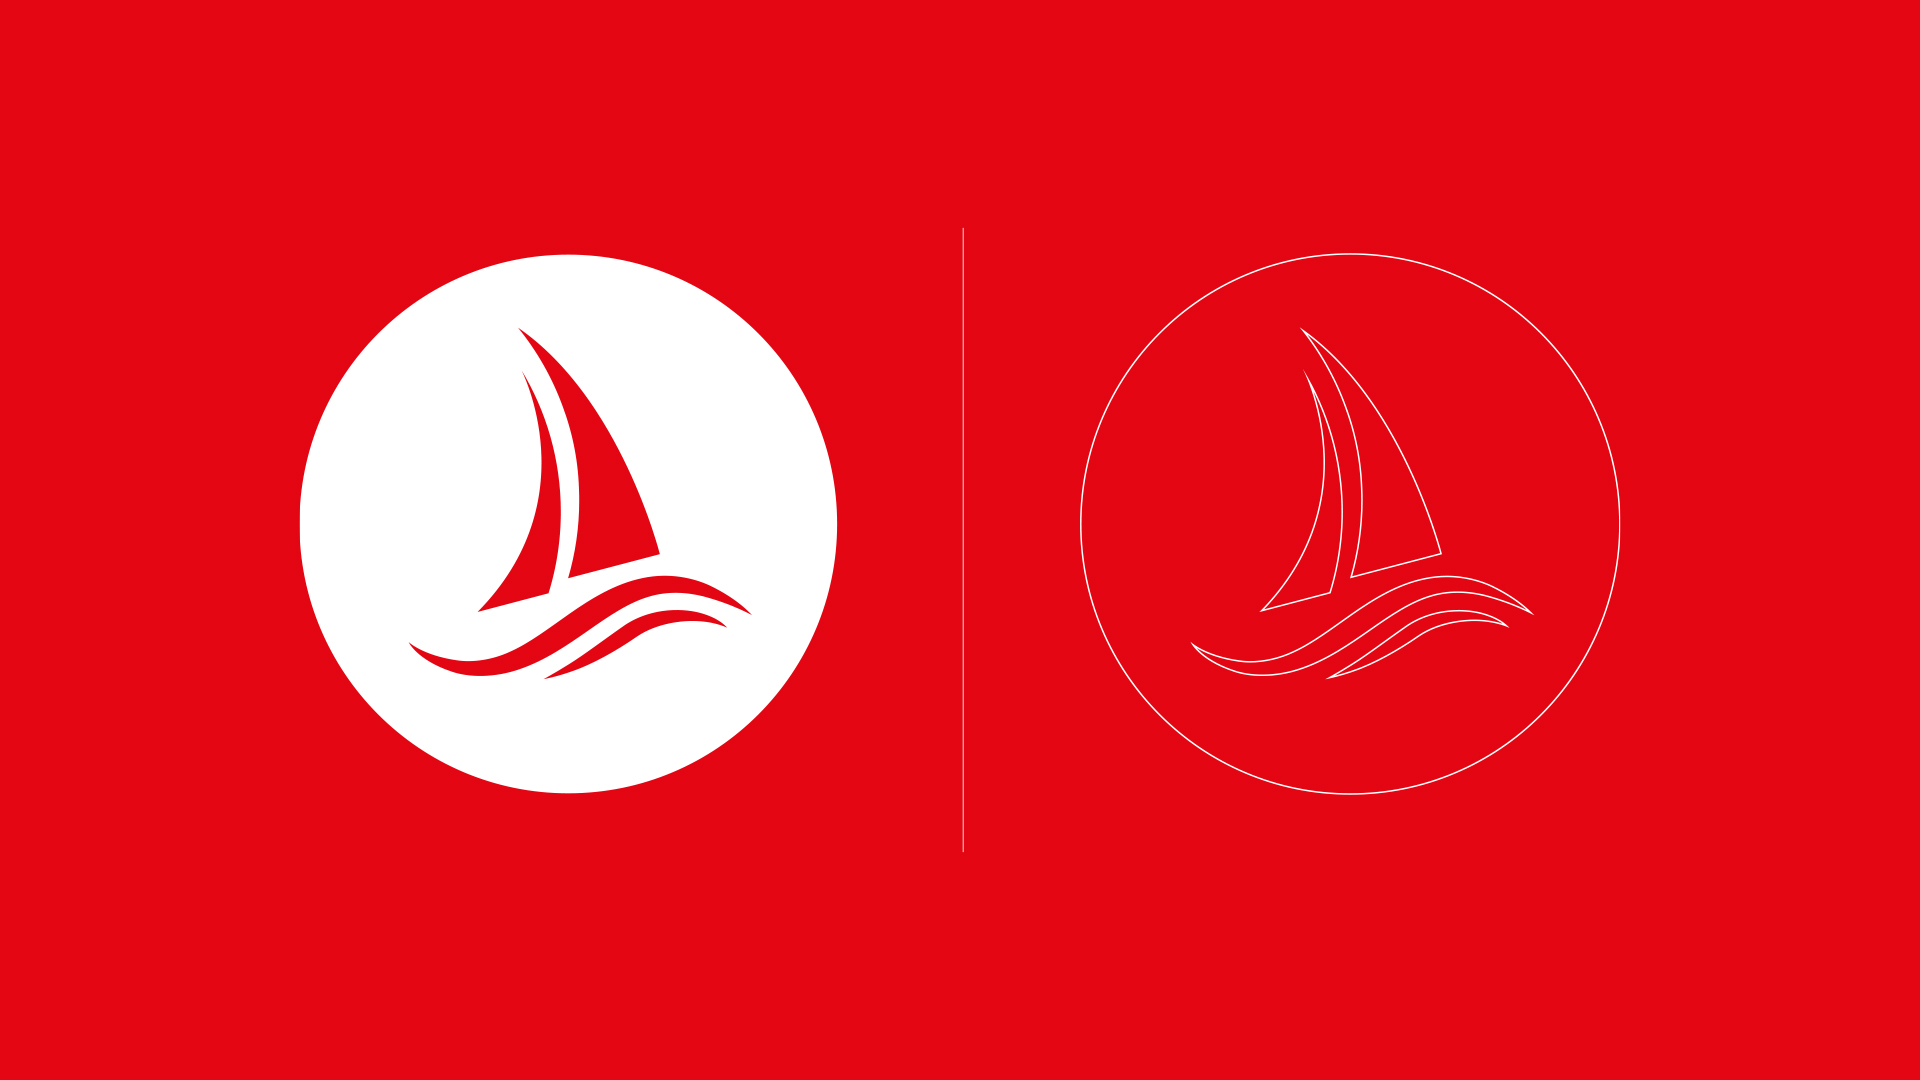 Jachthaven bon logo